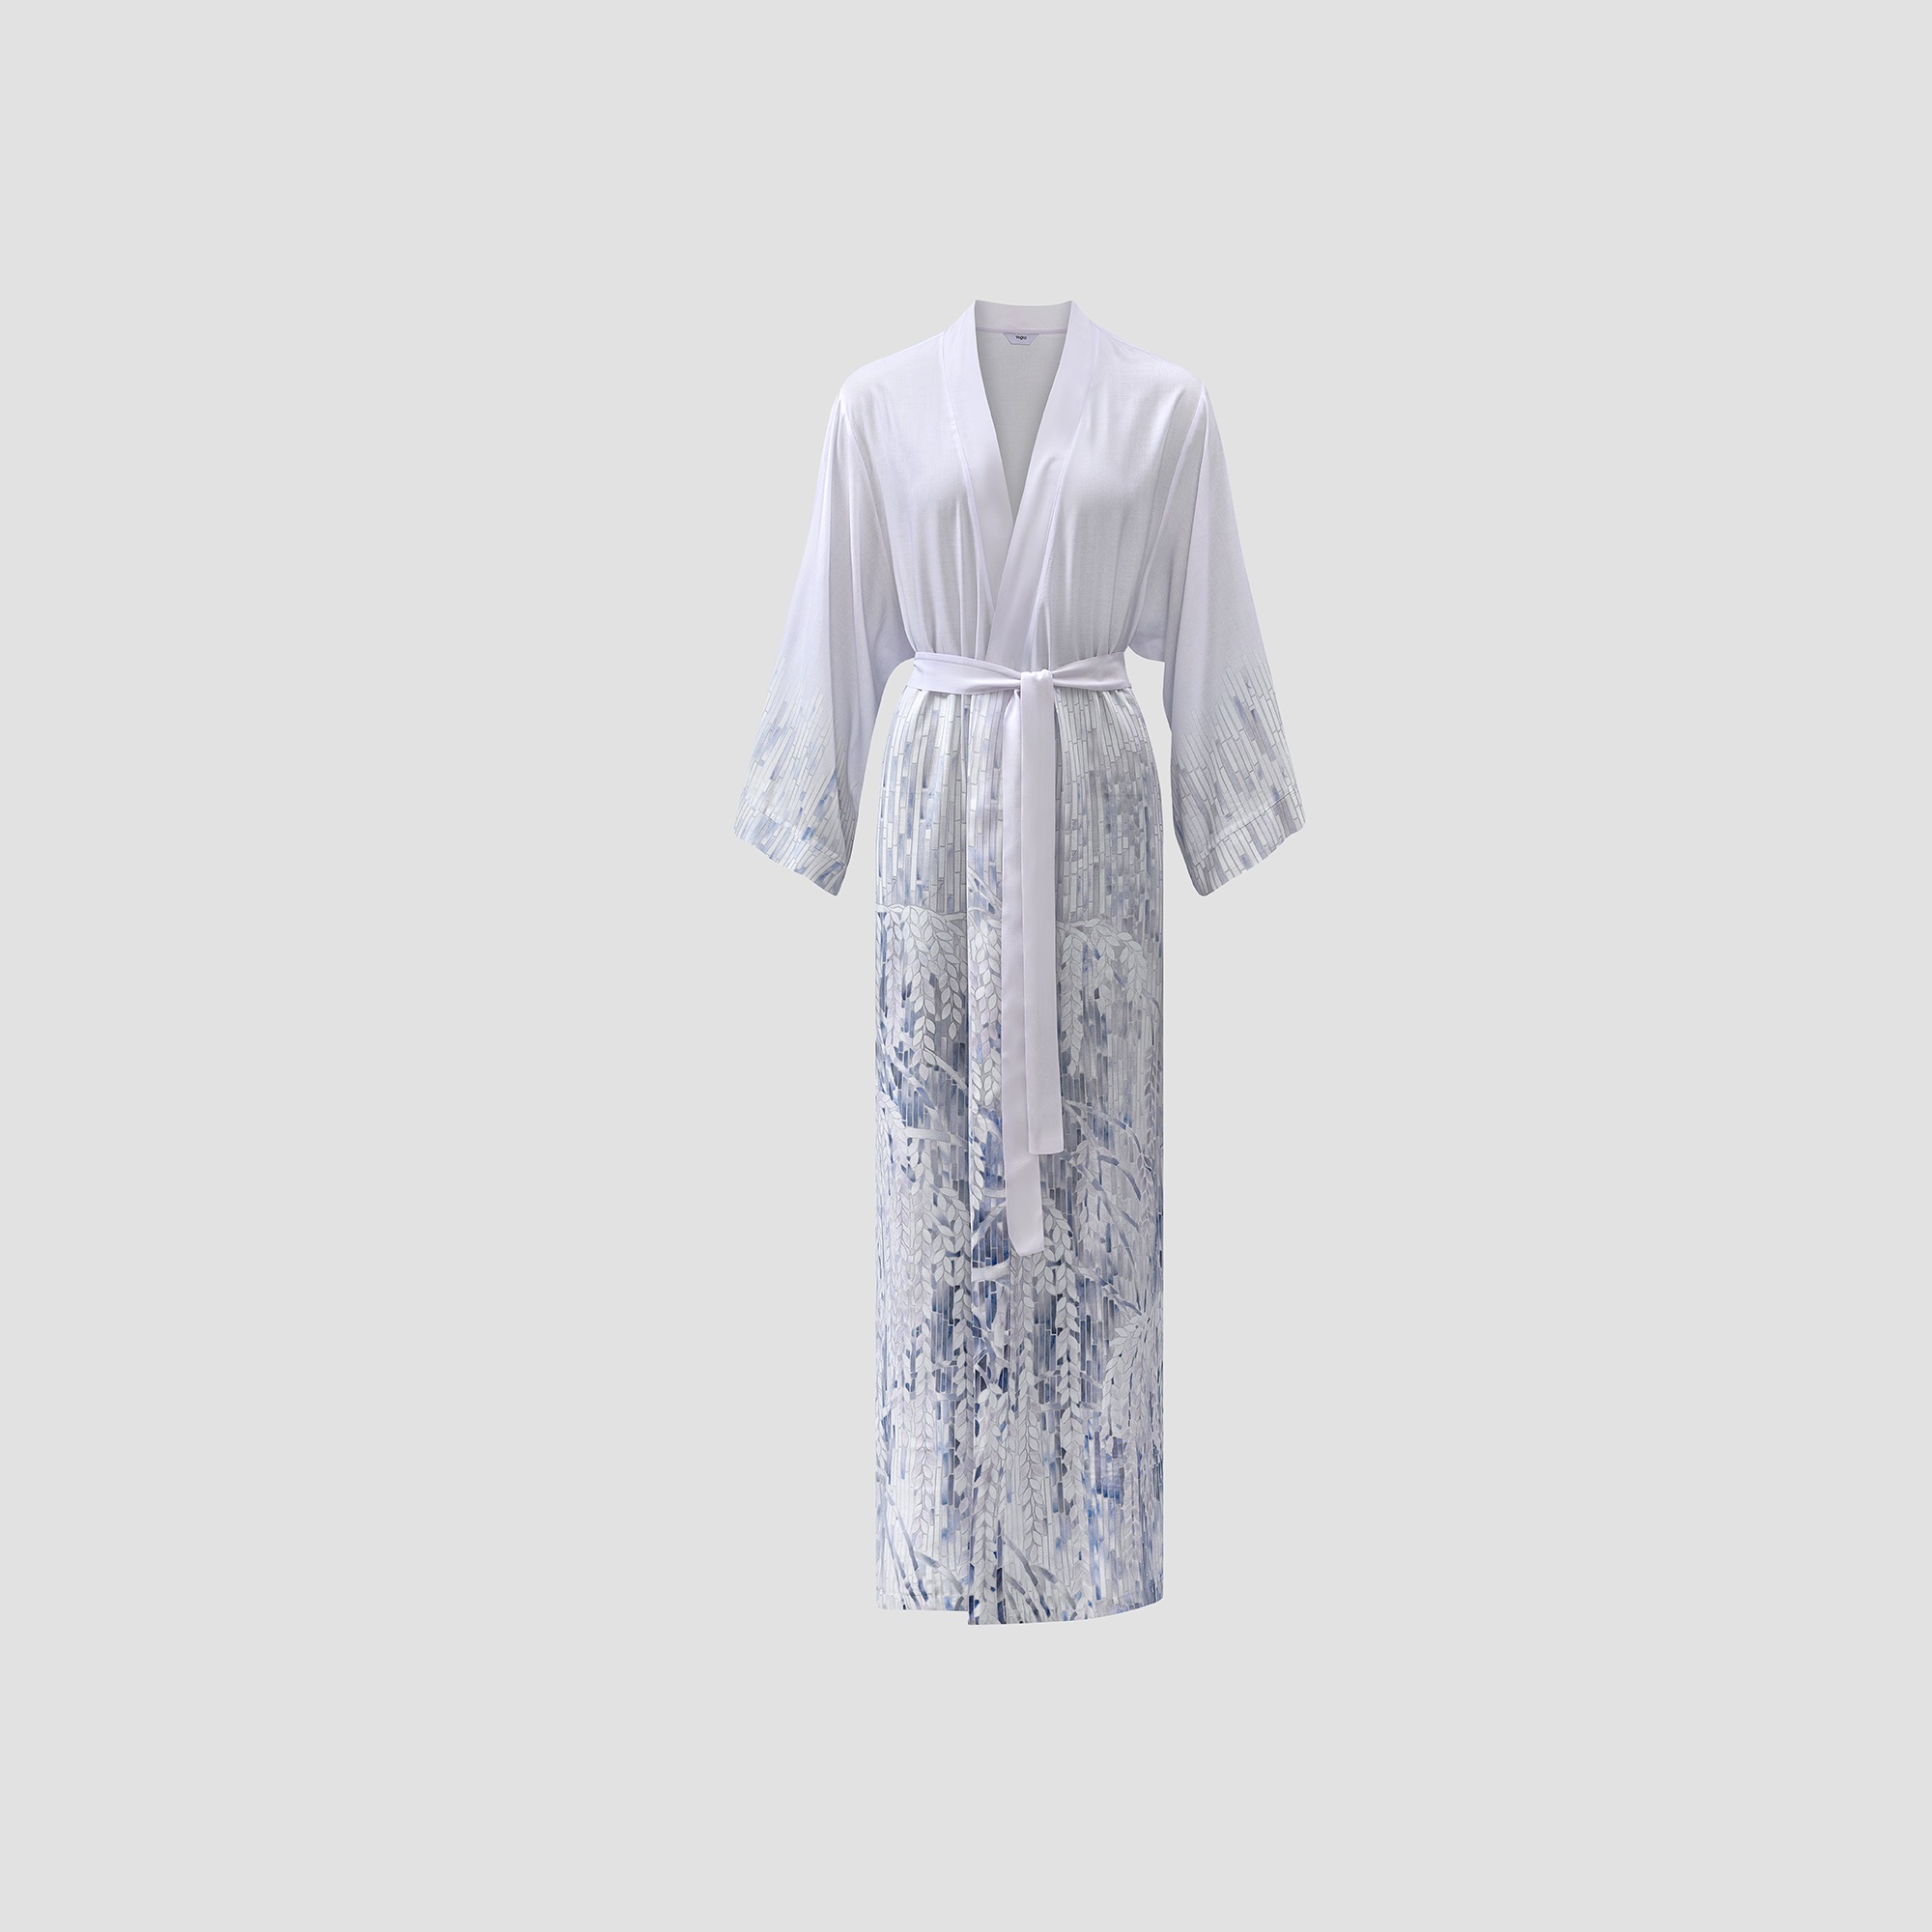 Кимоно Togas Вилонна бело-синее S(44) платье кимоно